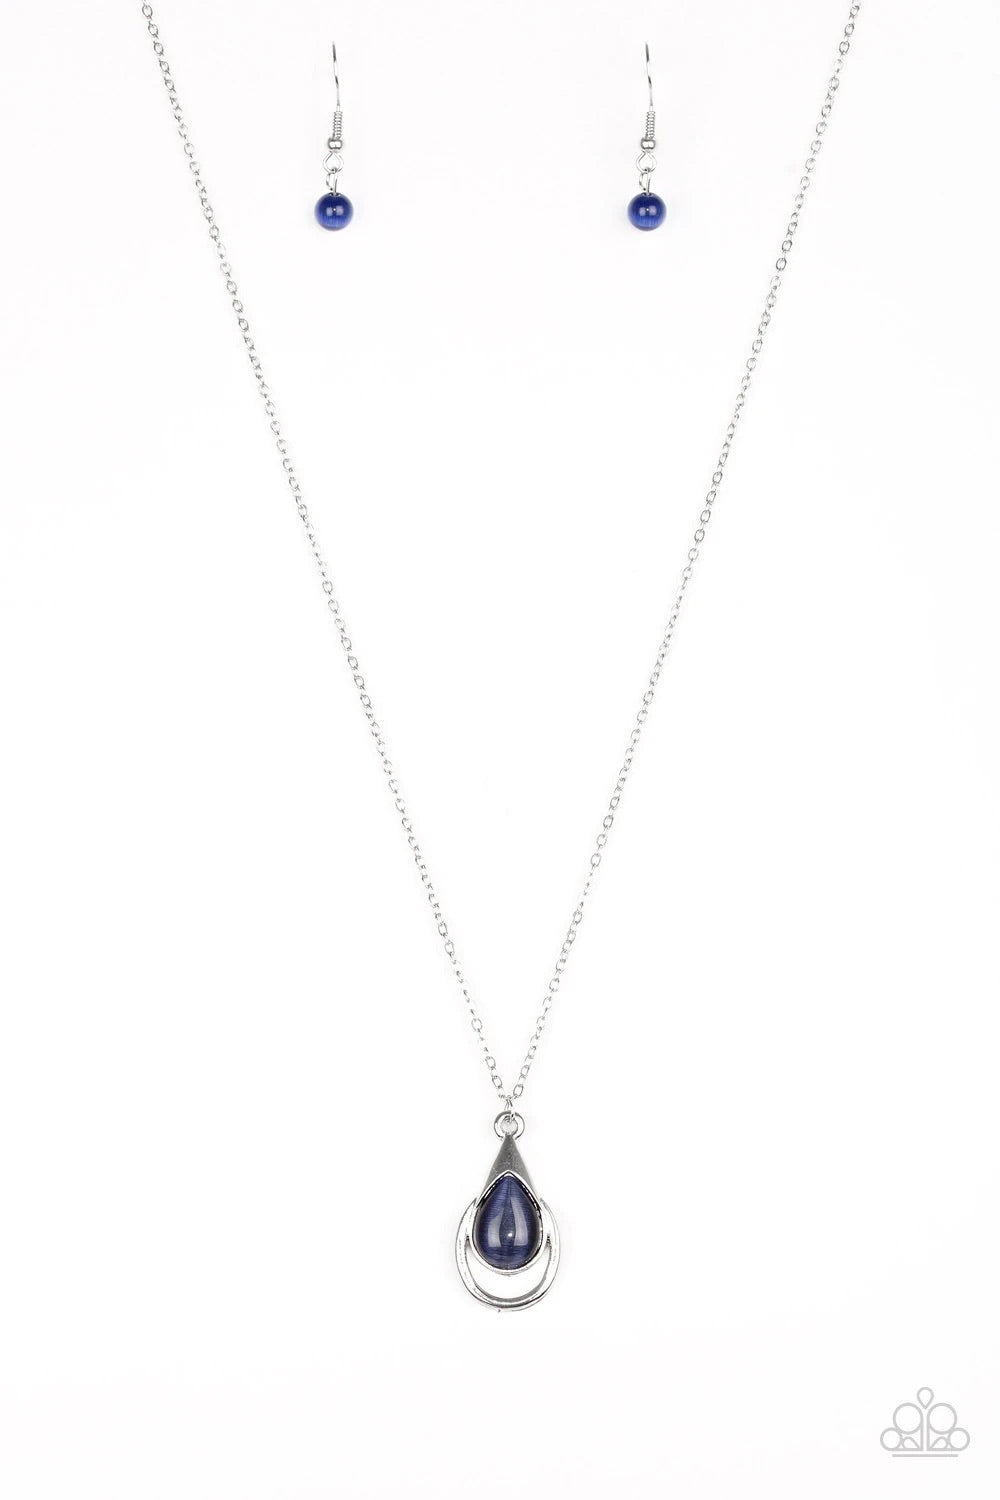 Just Drop It!  - Blue Necklace freeshipping - JewLz4u Gemstone Gallery